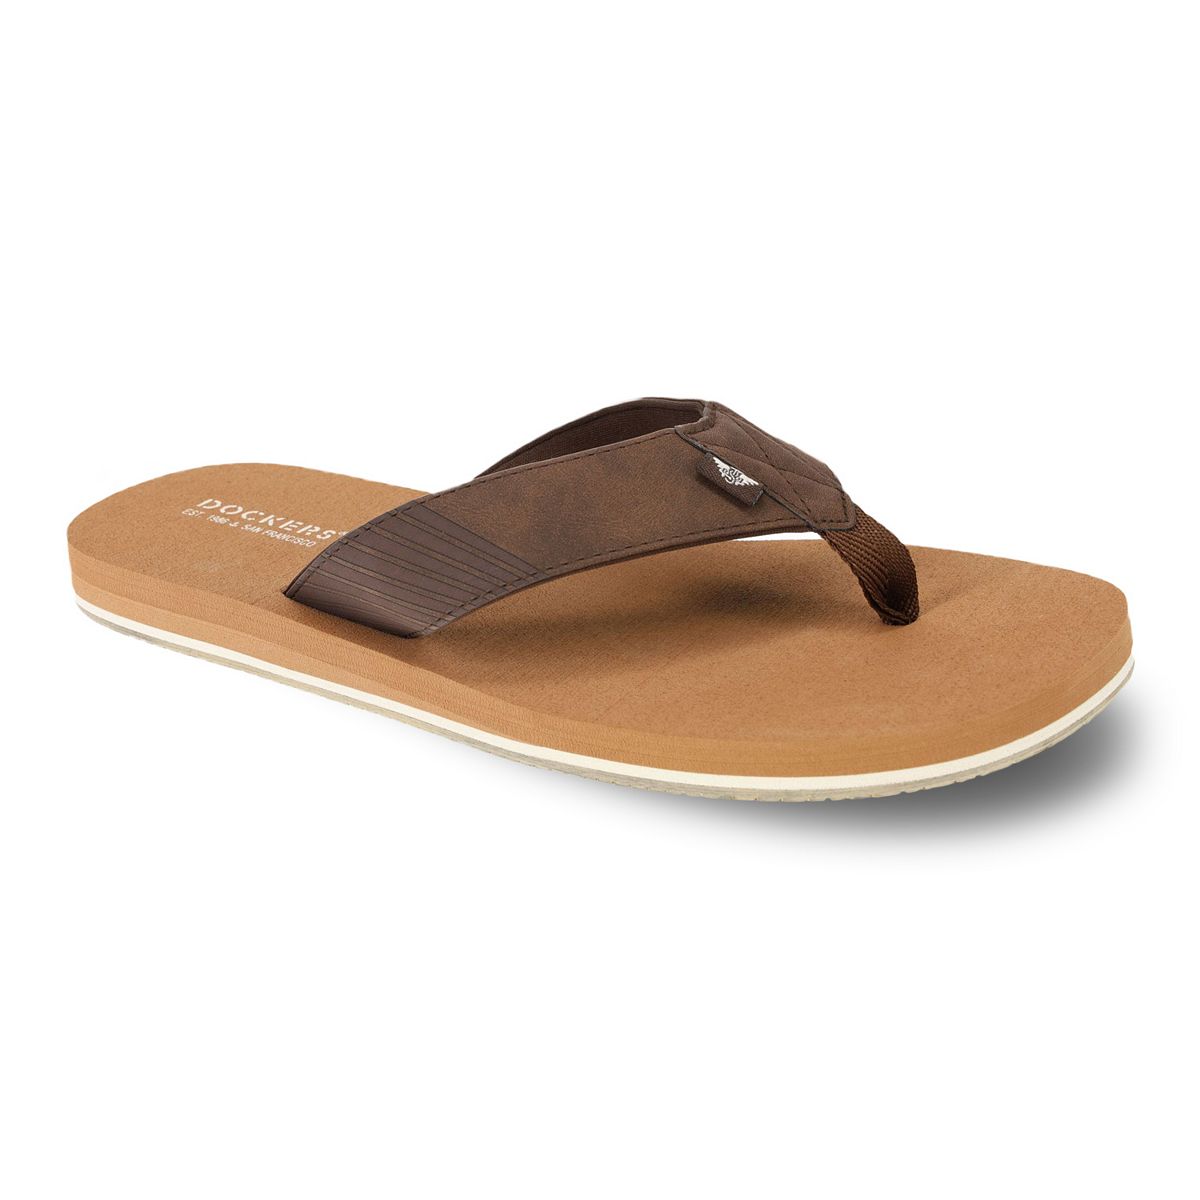 Dockers Men’s 100 Mile Collection Sandals $6.59